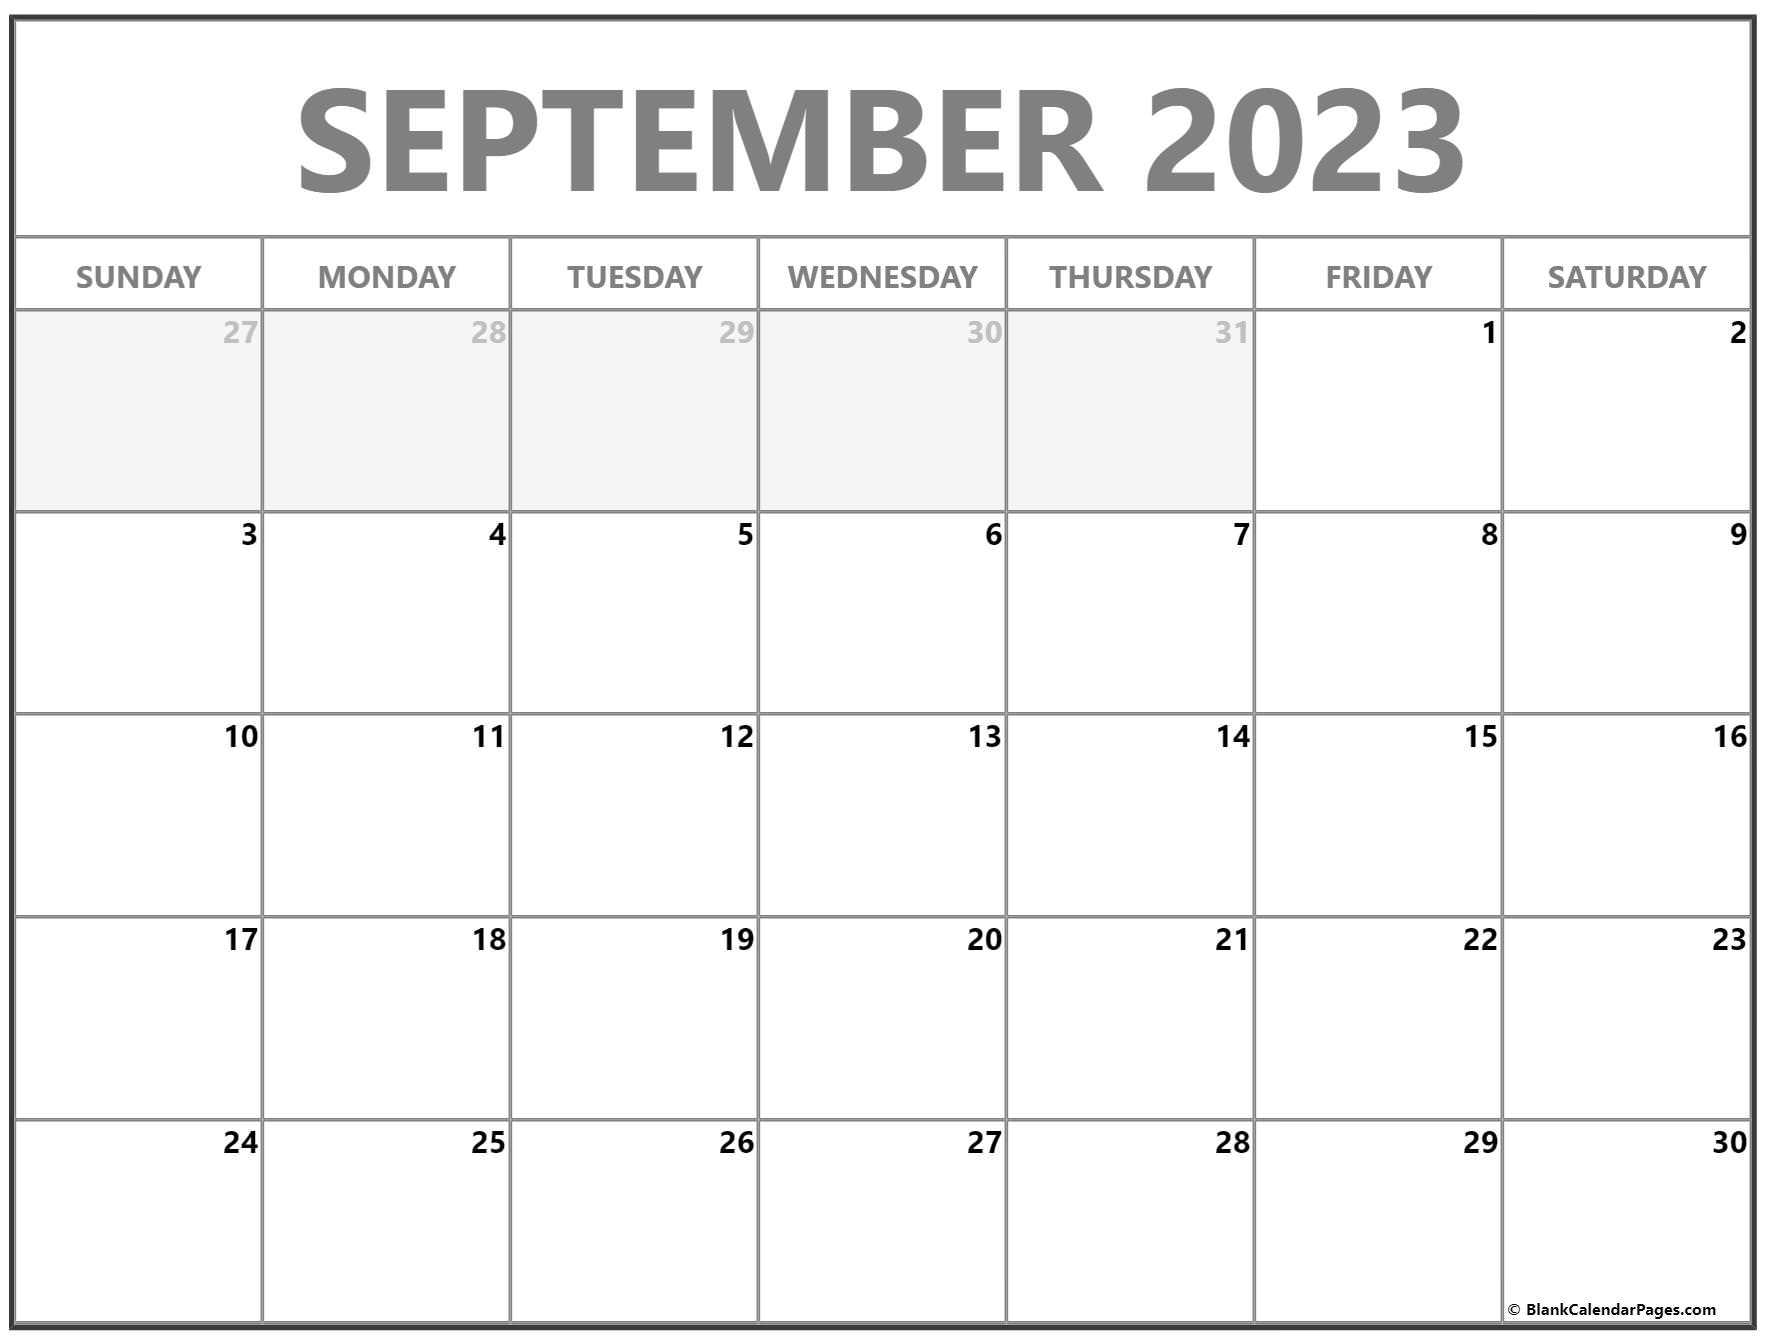 September 2023 Calendar Free Printable With Holidays August 2023 Calendar Free Printable 